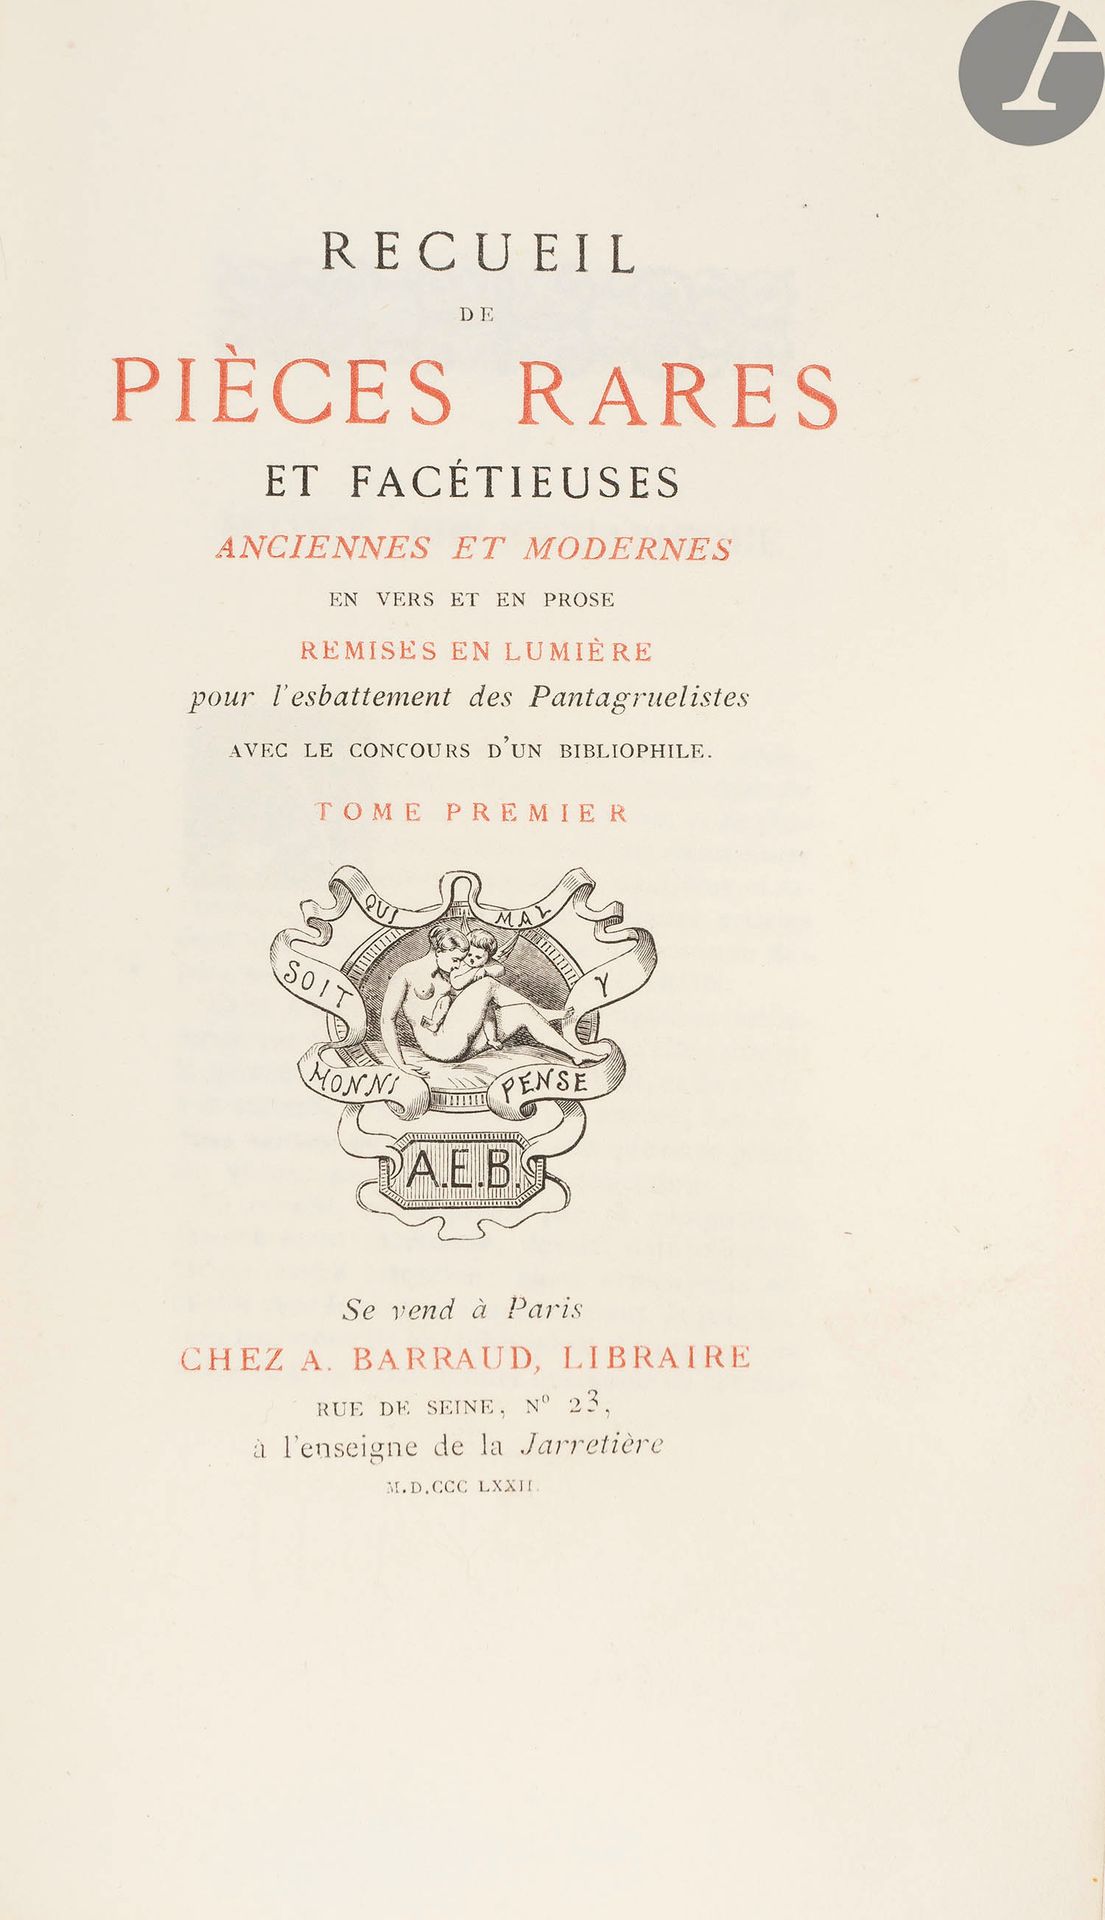 Null [FARCES]。
在一位藏书家的帮助下，收集了一些罕见的古代和现代的诗词和散文作品，供潘塔格鲁尔主义者欣赏。
巴黎: A. Barraud, 187&hellip;